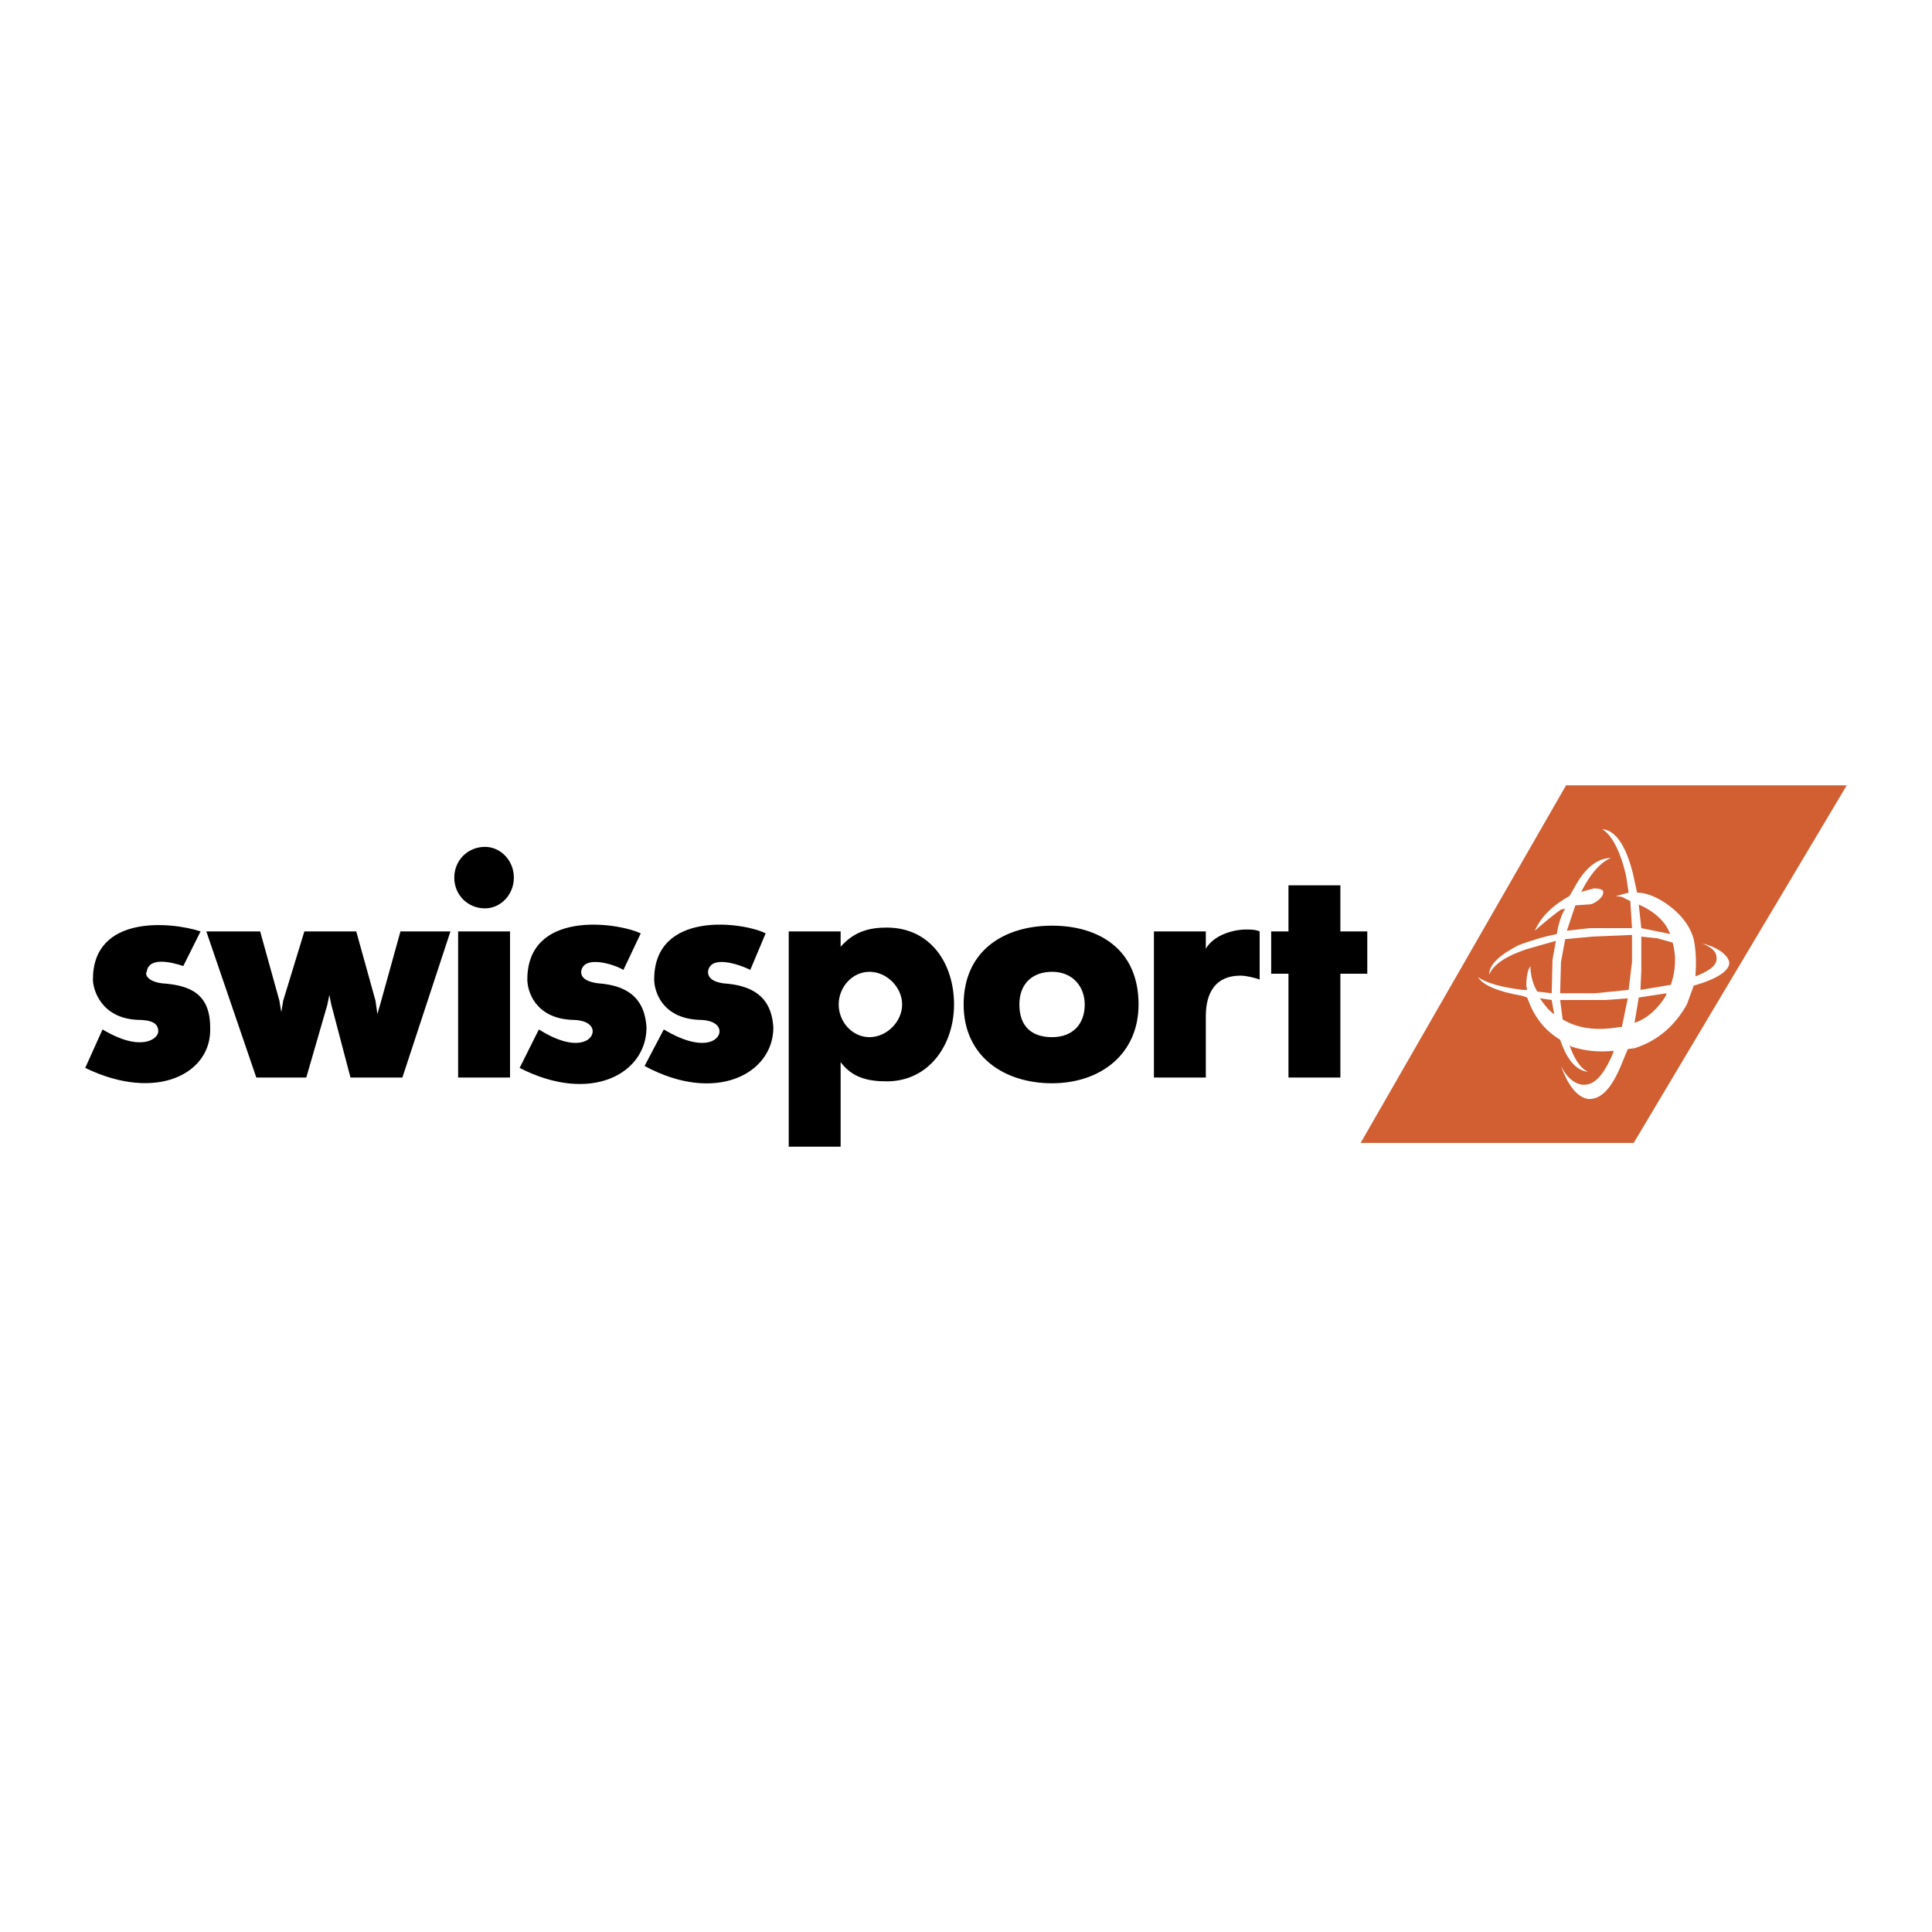 https://freightquip.com/production/wp-content/uploads/2020/07/Swissport-Logo.png